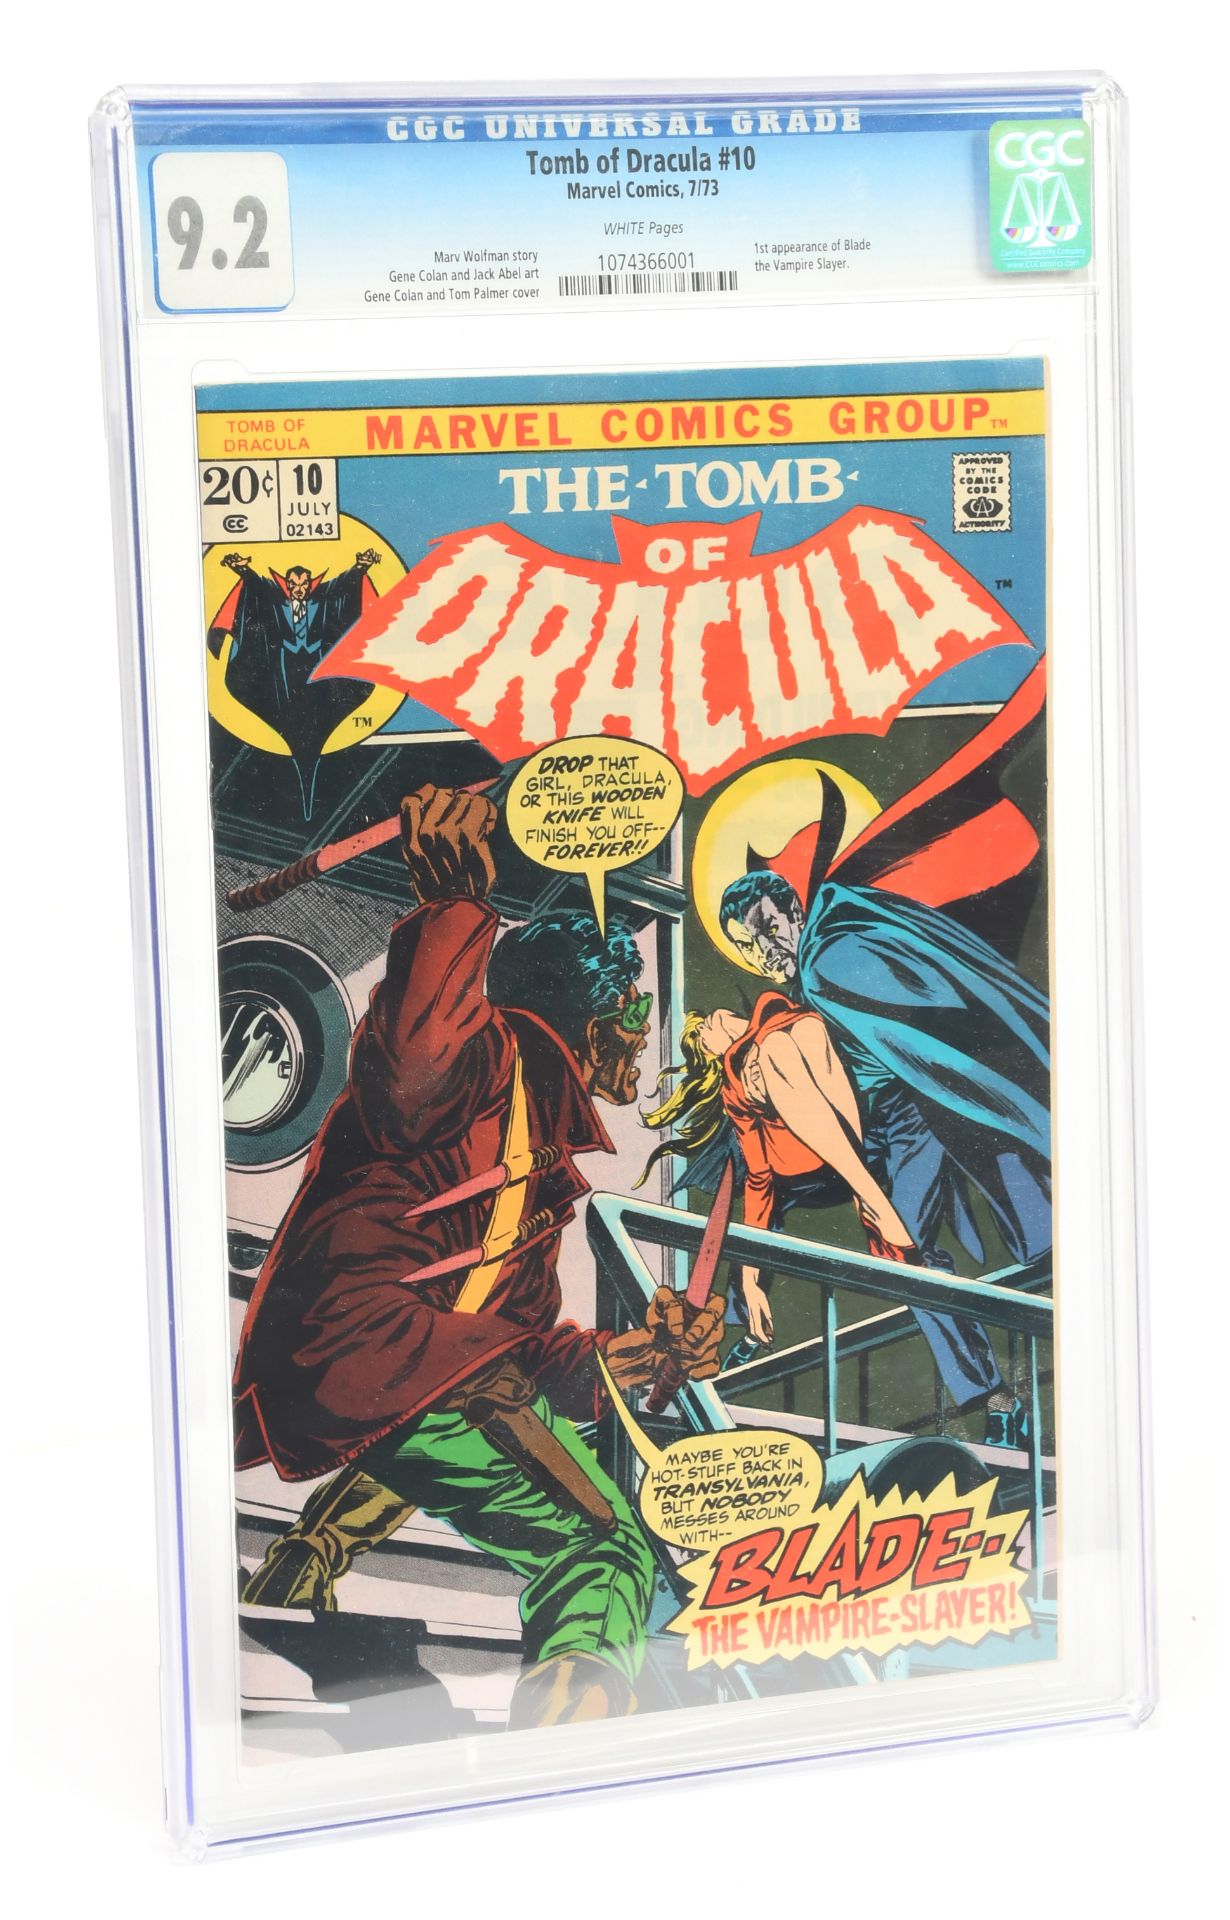 Marvel Comics Tomb of Dracula #10 CGC Universal Grade 9.2 1st Appearance of Blade the Vampire Slayer